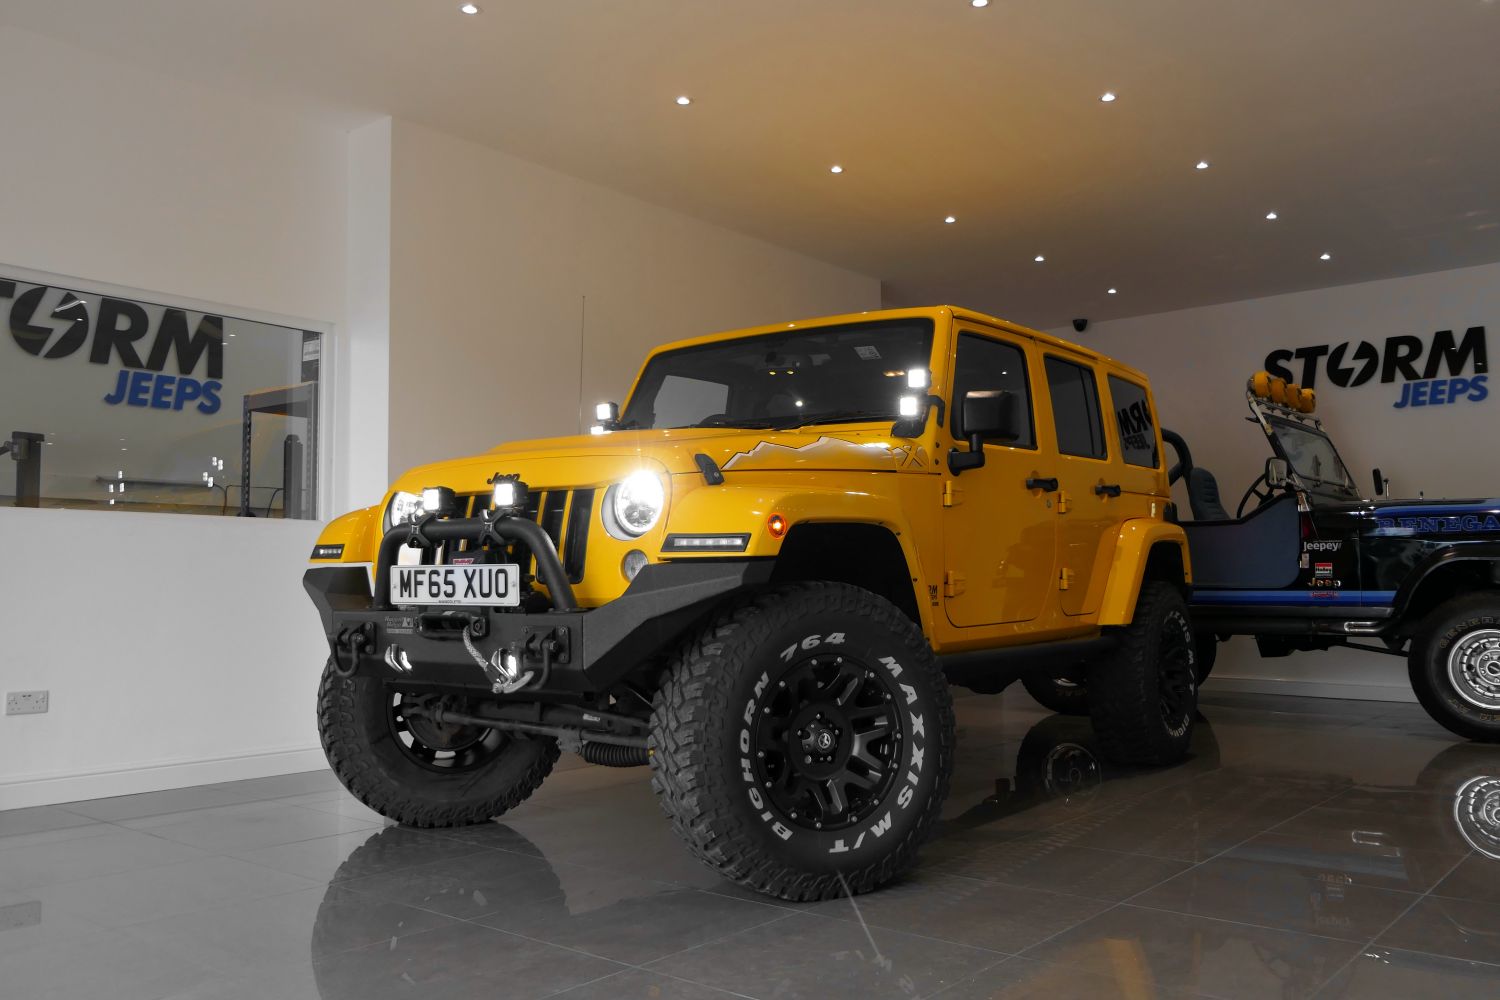 STORM-52, 2015 Baja Yellow Jeep Wrangler X-Edition 4 Door  CRD |  Showcase | Storm Jeeps